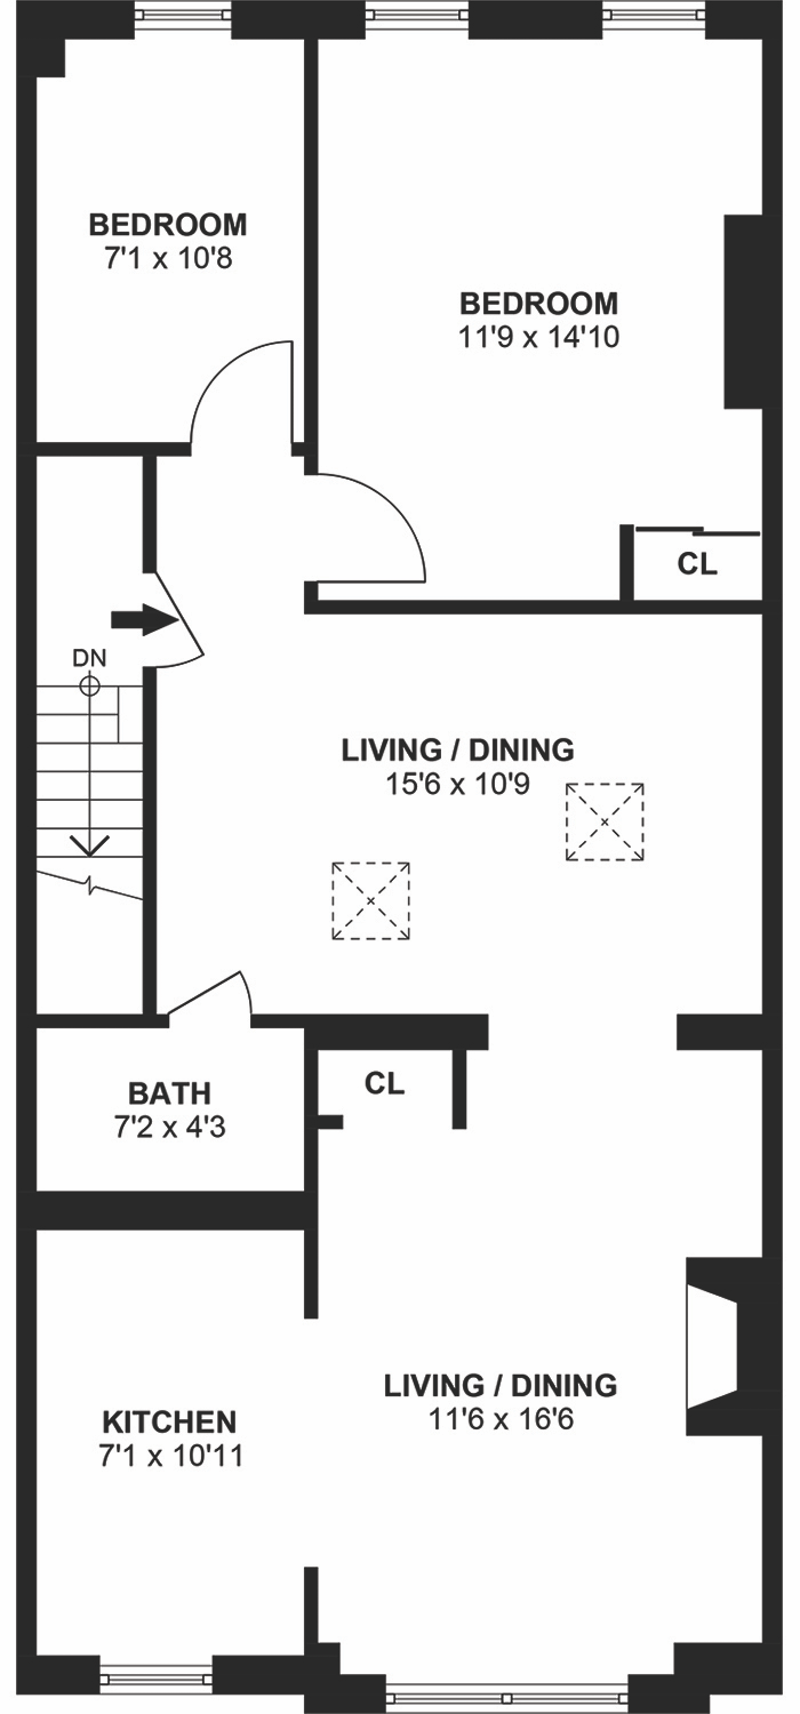 Floorplan for 1610 8th Avenue, 3A